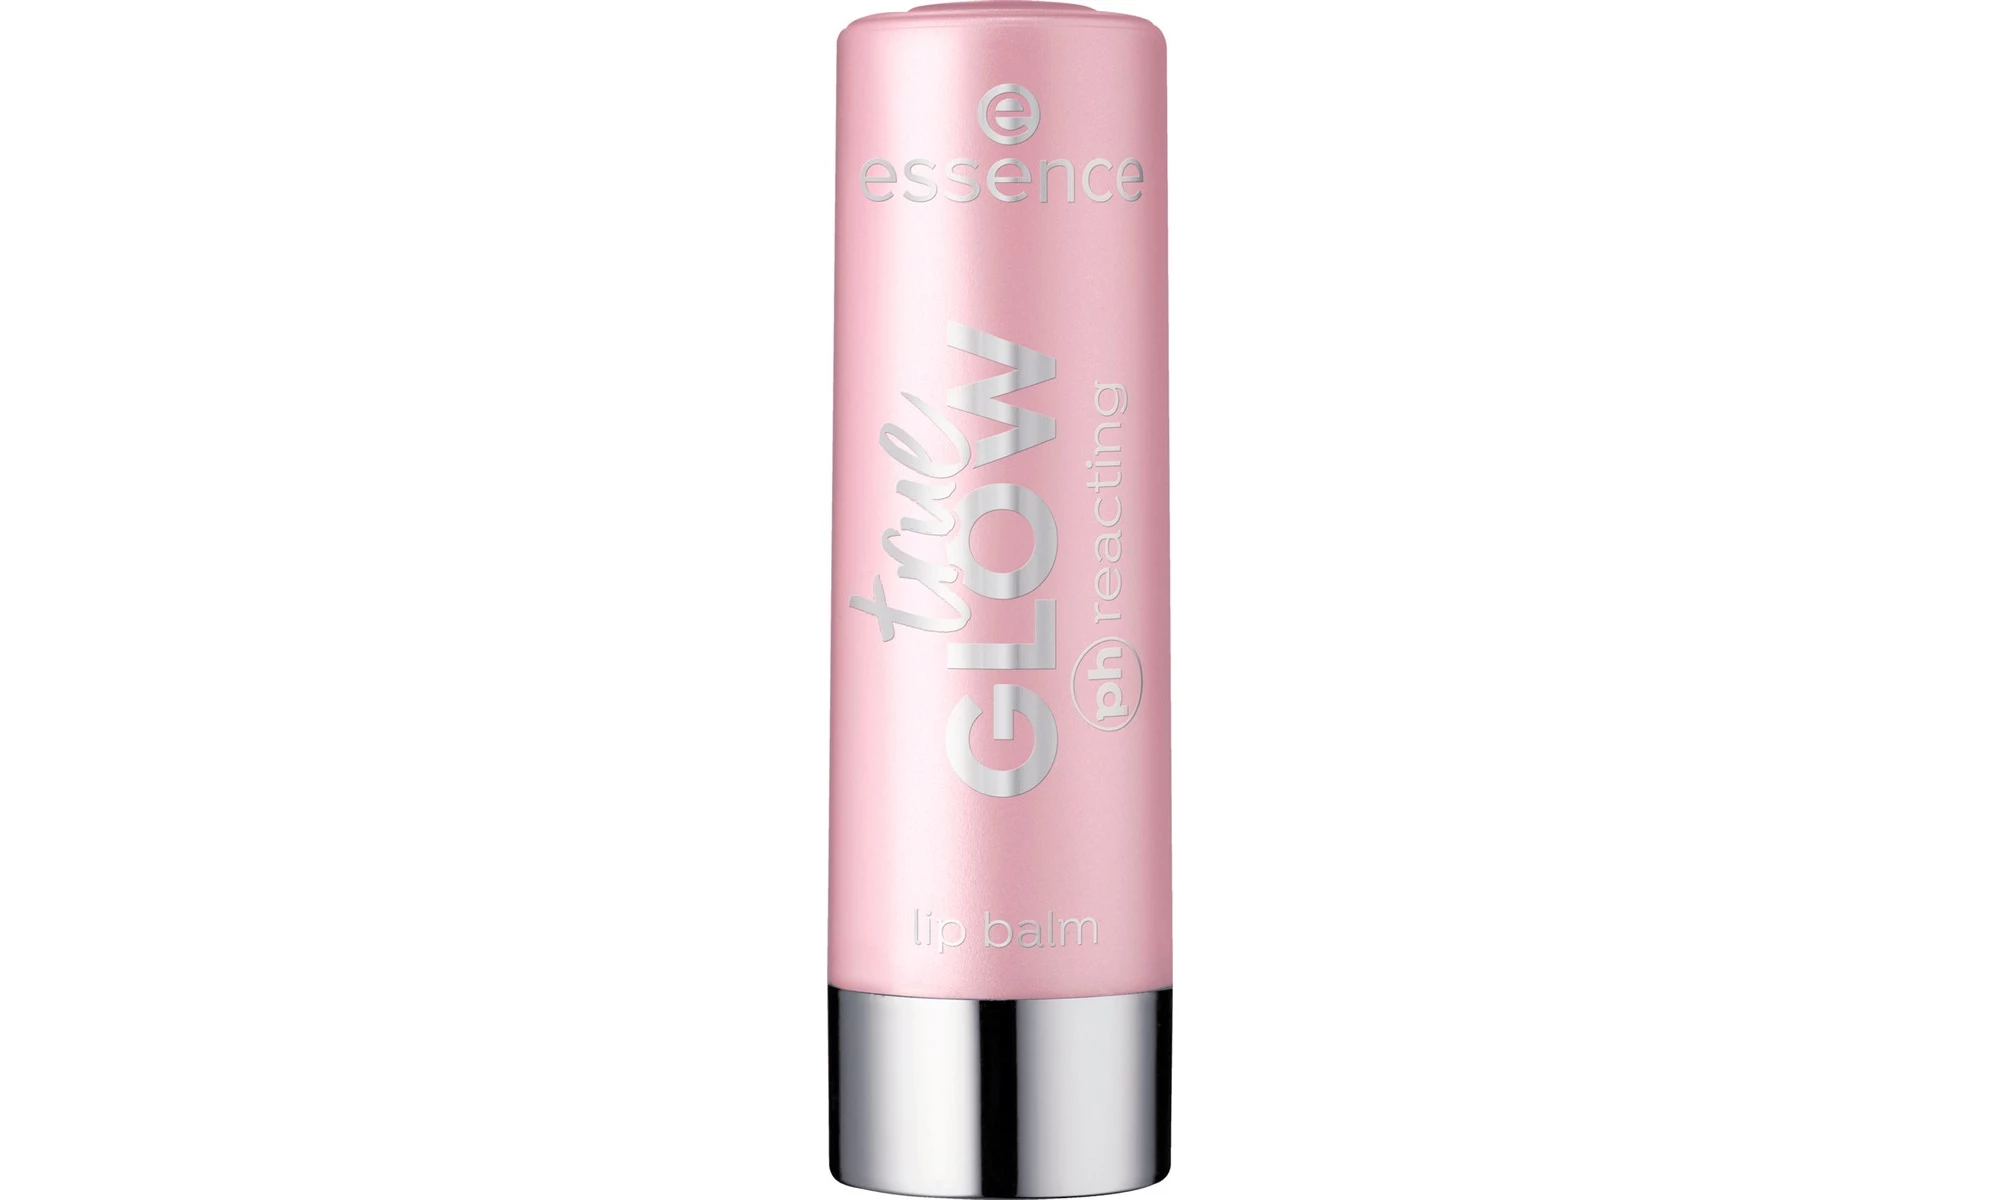 Comprar essence Electric Glow Colour Changing Lip & Cheek Oil 4.4ml · Brasil